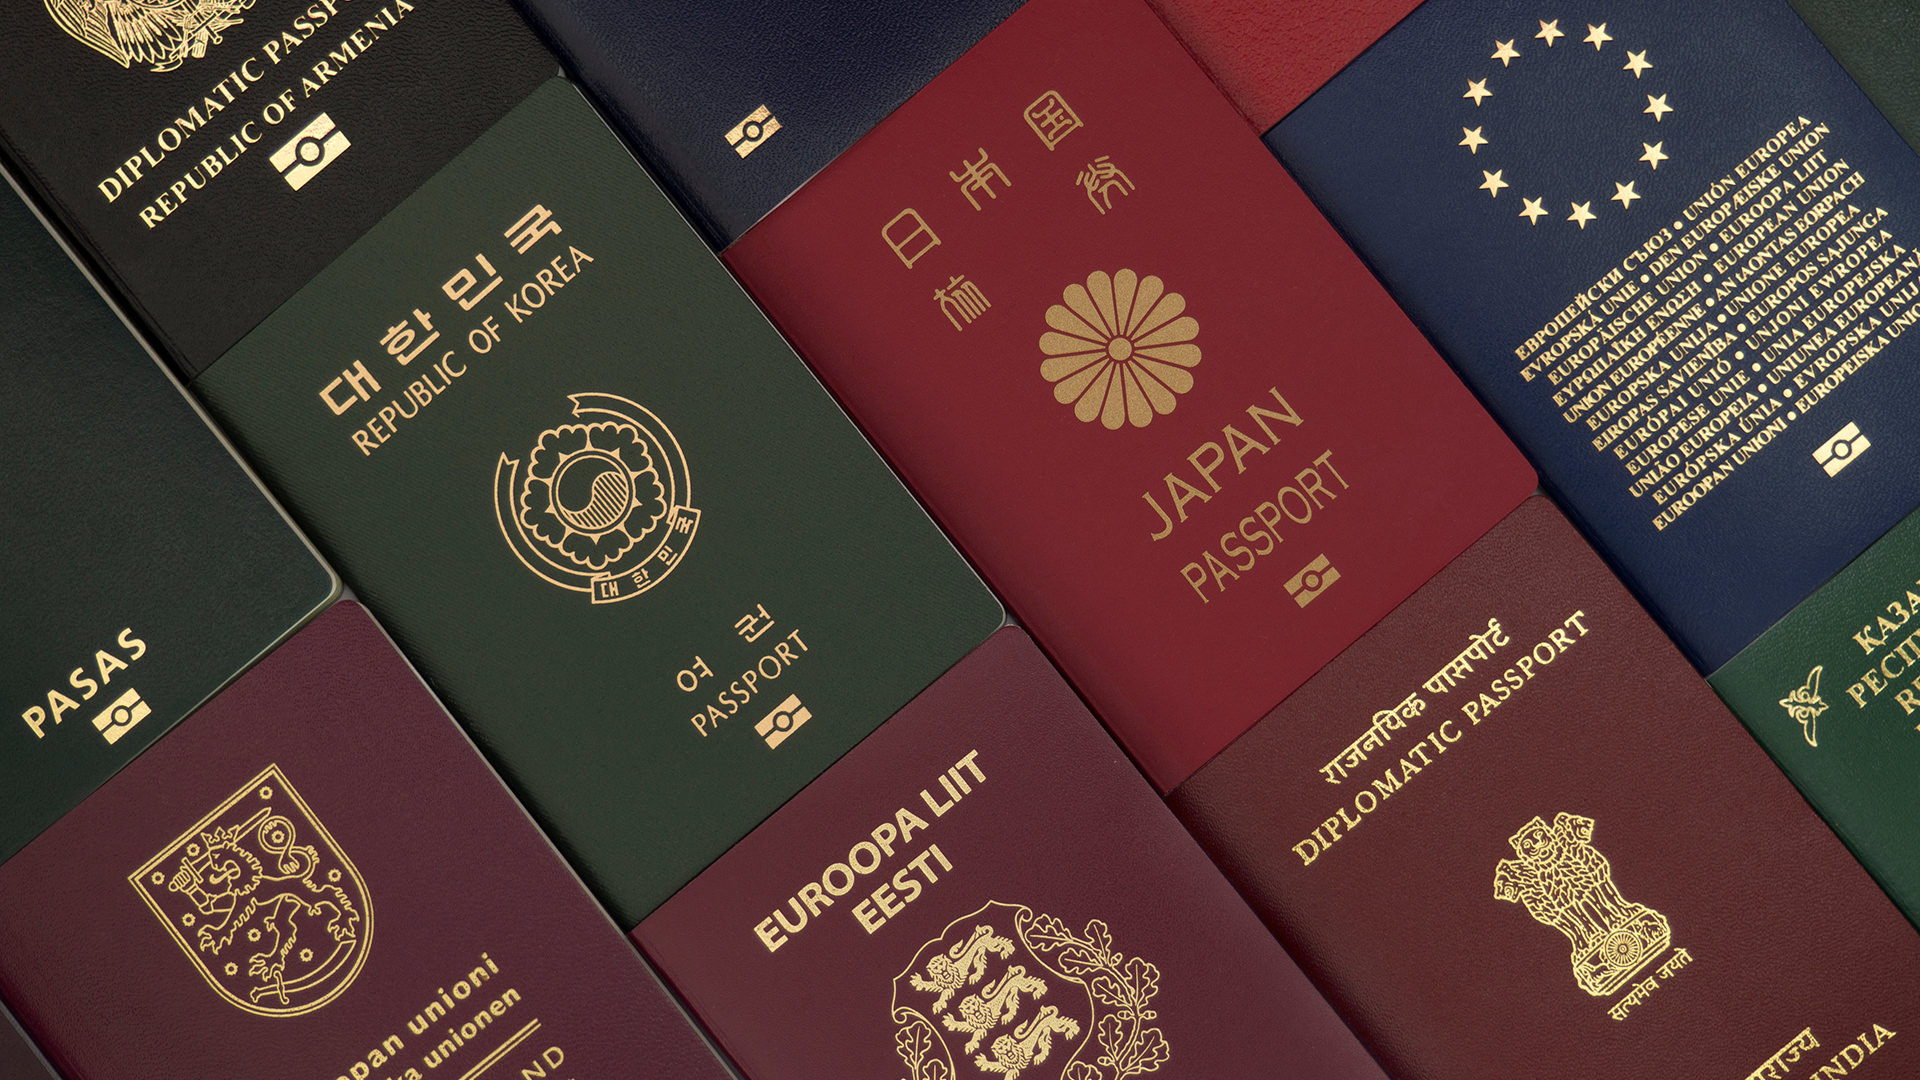 The reputation of passports worldwide